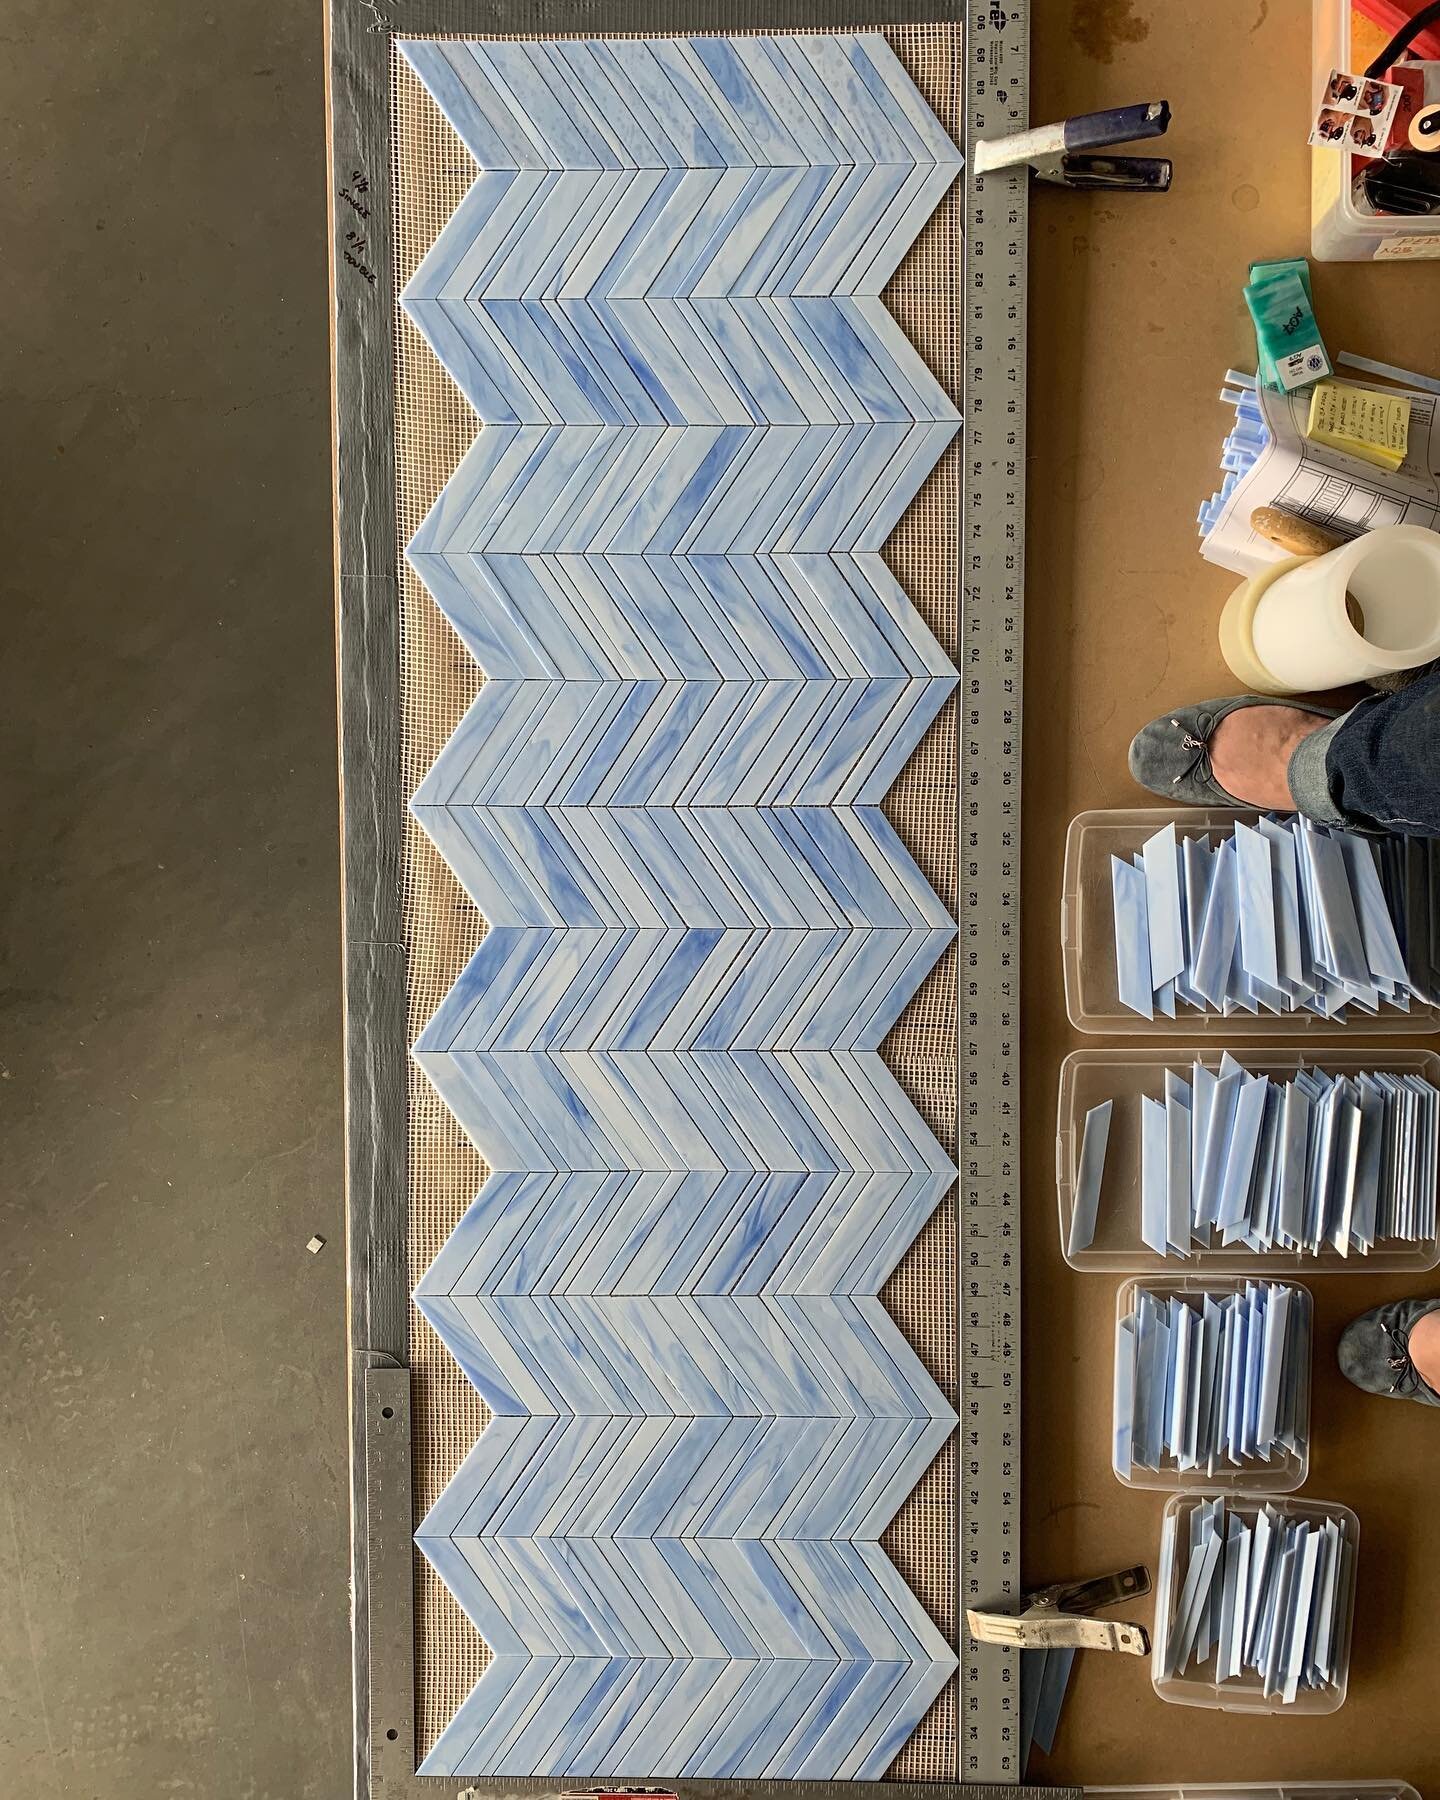 Our powder blue Zig Zag pattern waiting to get taped up and shipped 💙 by @mixedupmosaic 
.
.
.
#mixedupmosaic #handmade #mosaic #madeinbrookyn  #custommosaics #mosaic 
#glasstile #madeintheusa